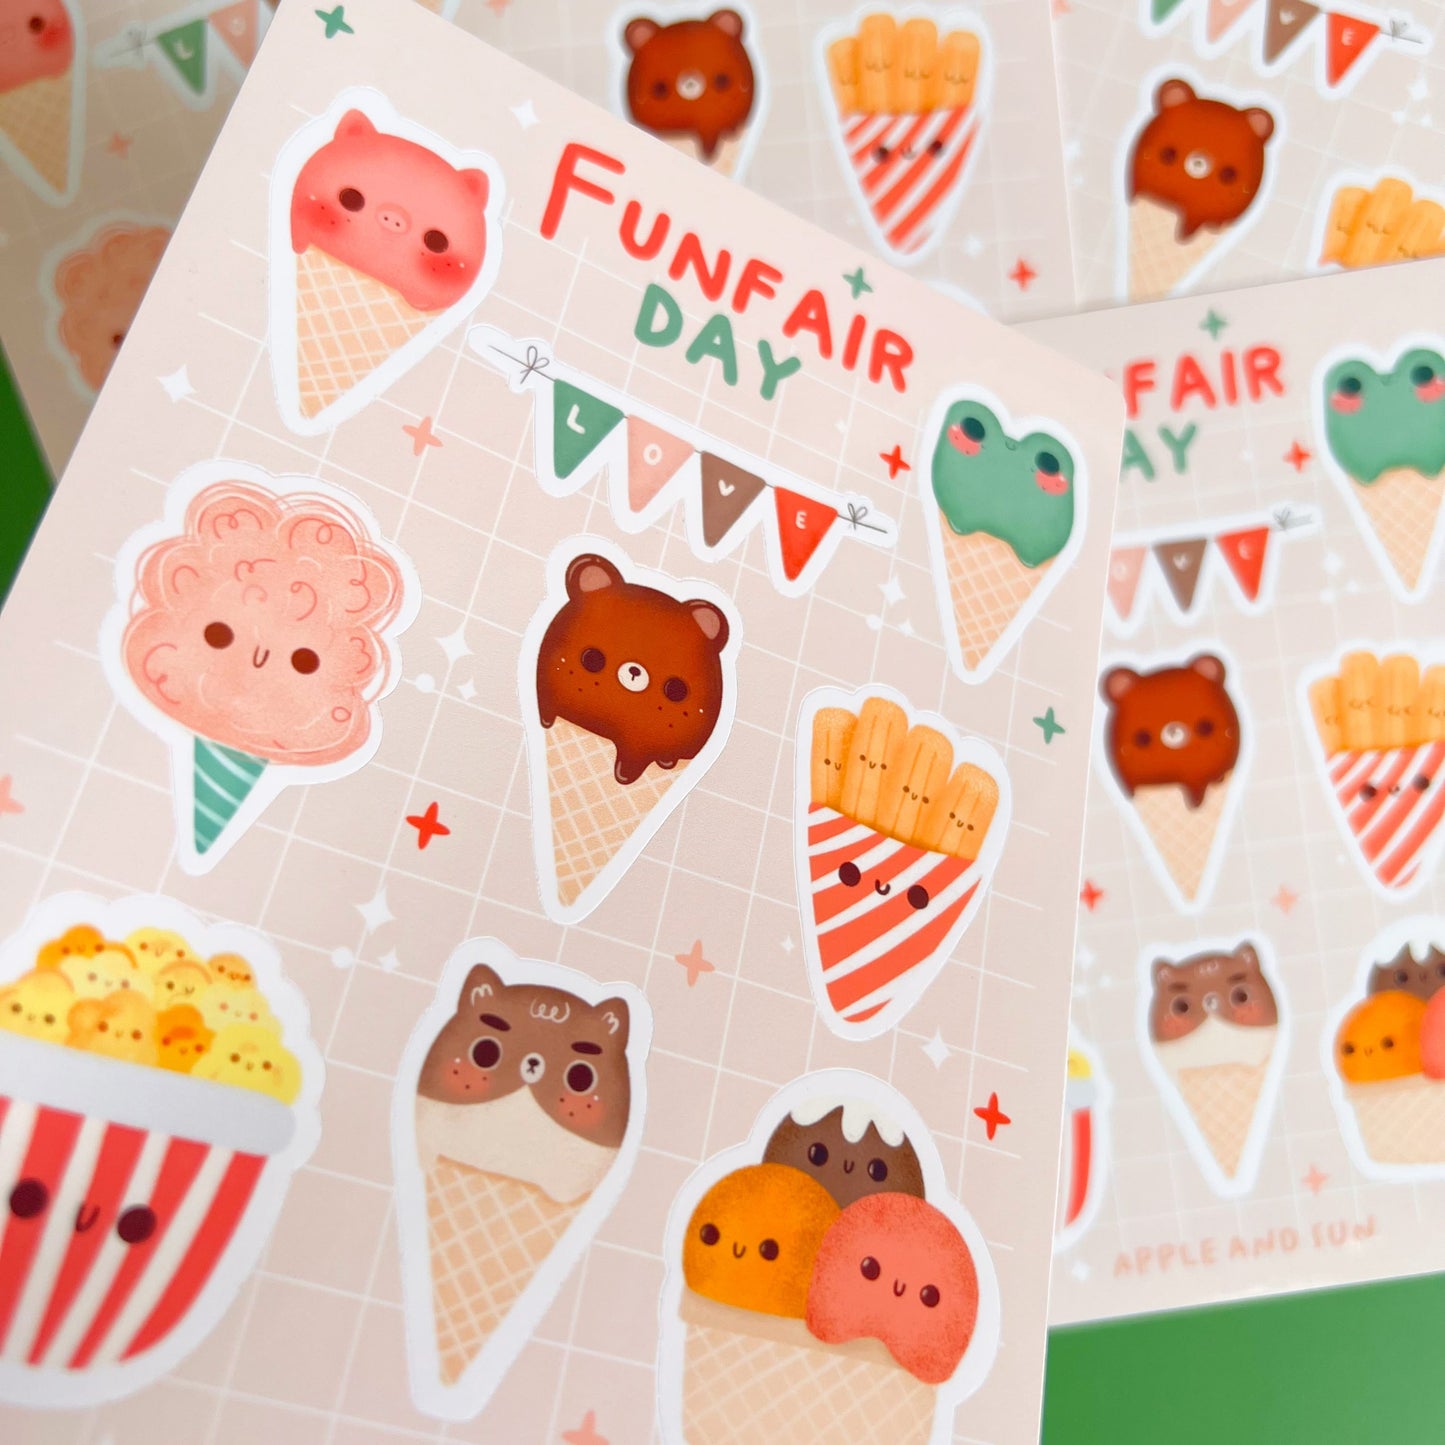 Funfair day Stickers sheet